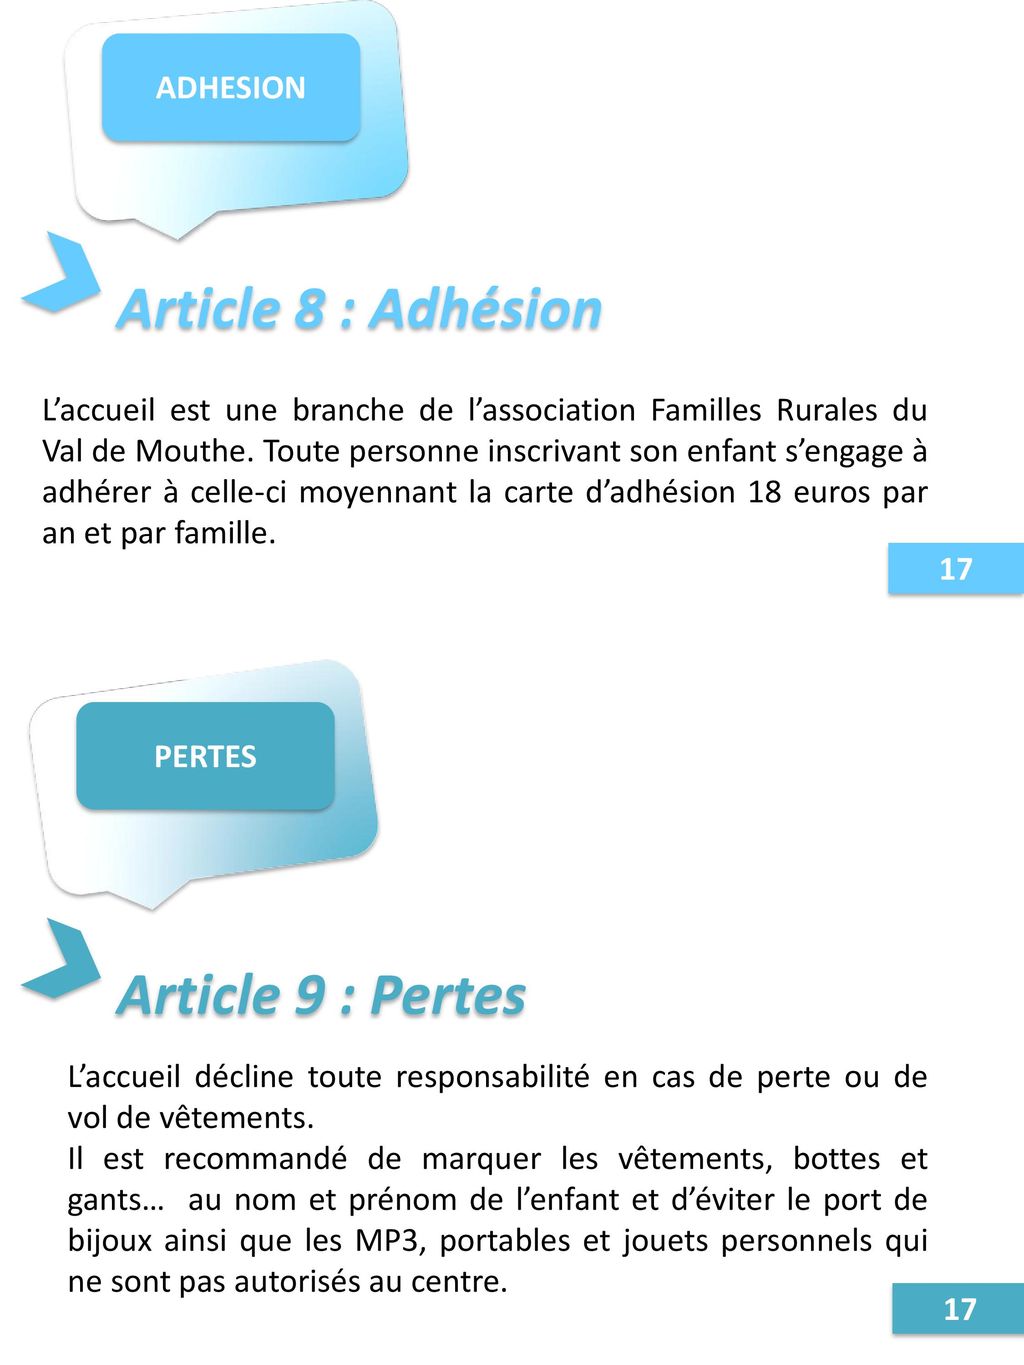 Article 8 : Adhésion Article 9 : Pertes ADHESION